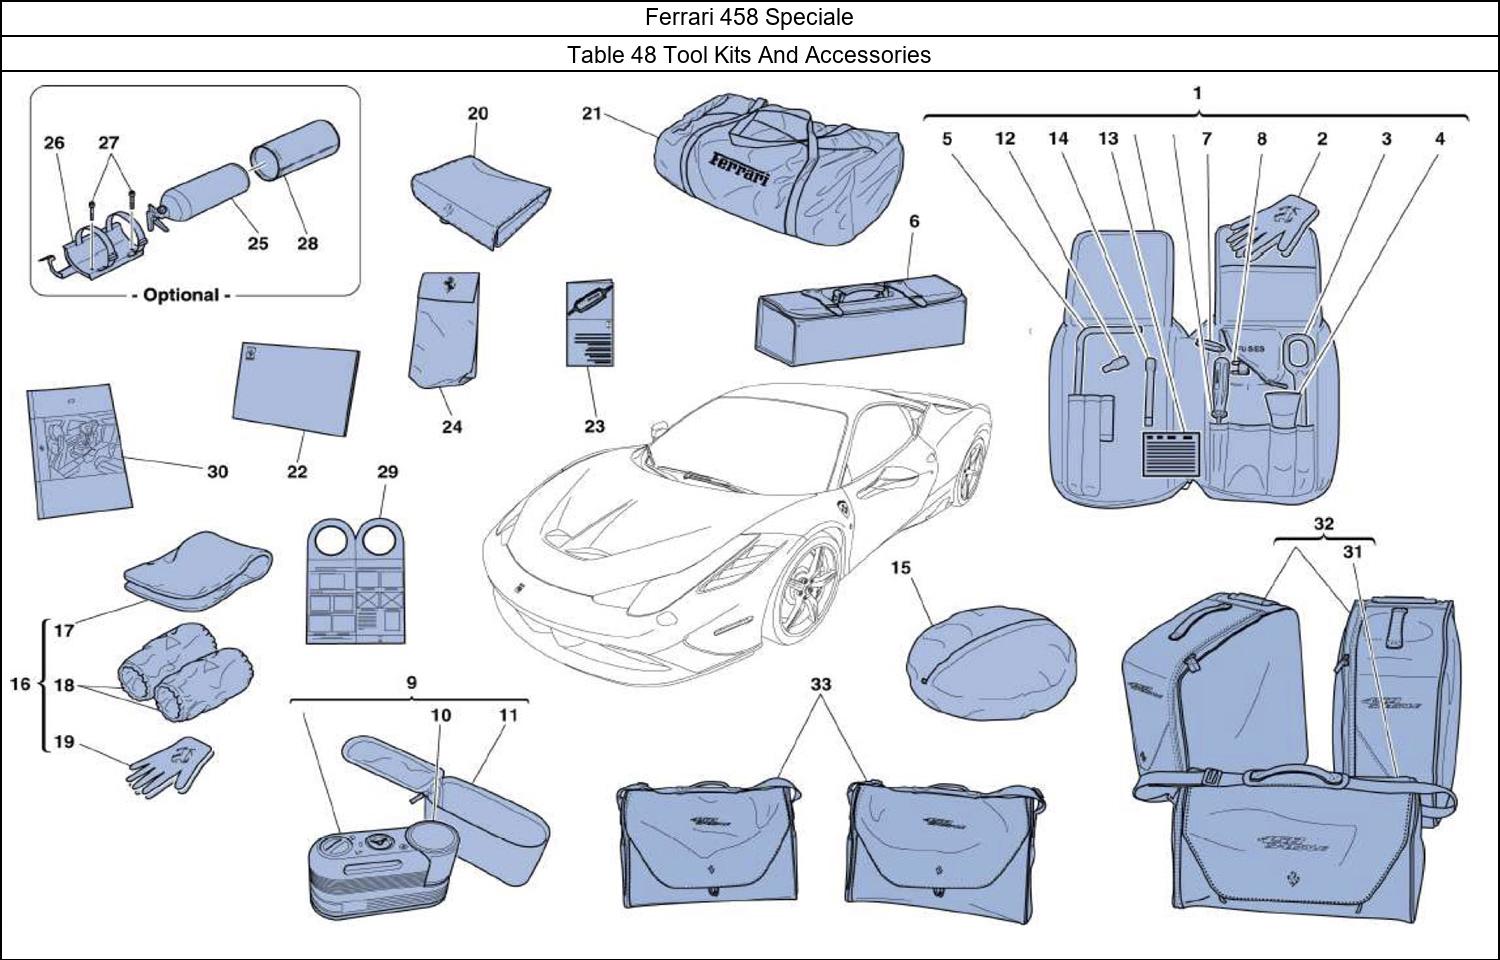 Ferrari Parts Ferrari 458 Speciale Table 48 Tool Kits And Accessories